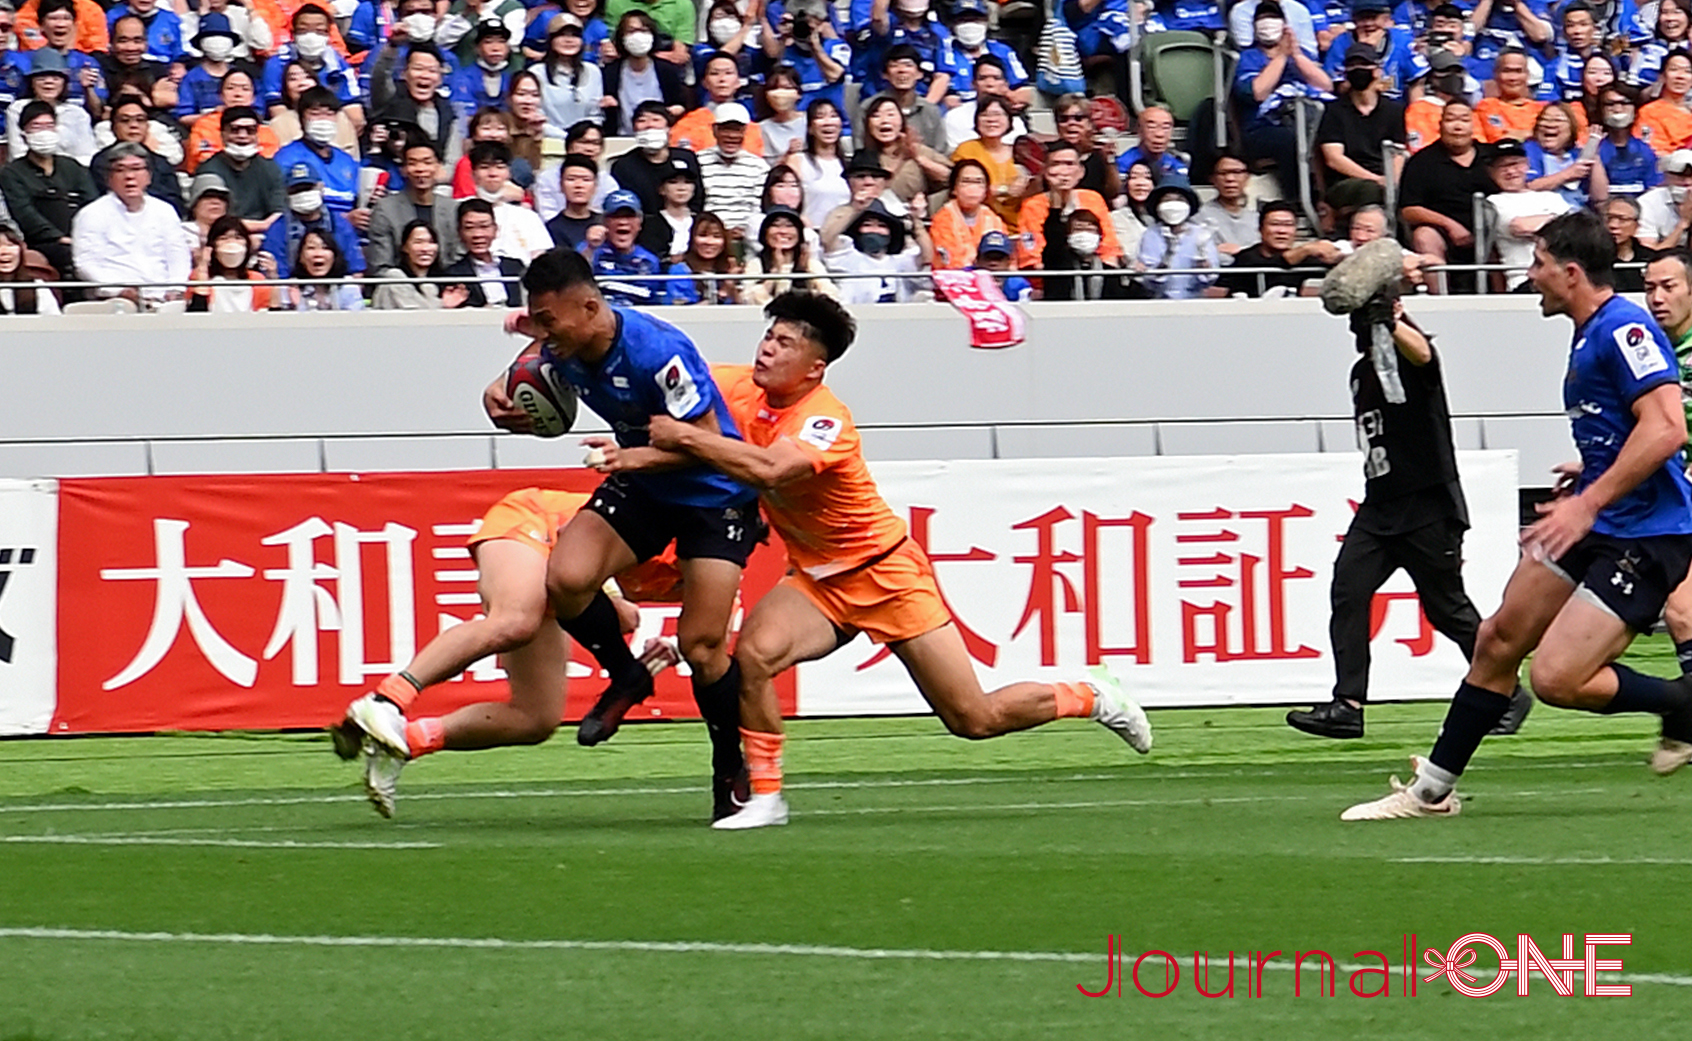 Japan Rugby League One final match, Haruto Kida (Japan rugby union team) tackled Tomoki Osada (Japan rugby union team); Photo by Journal-ONE